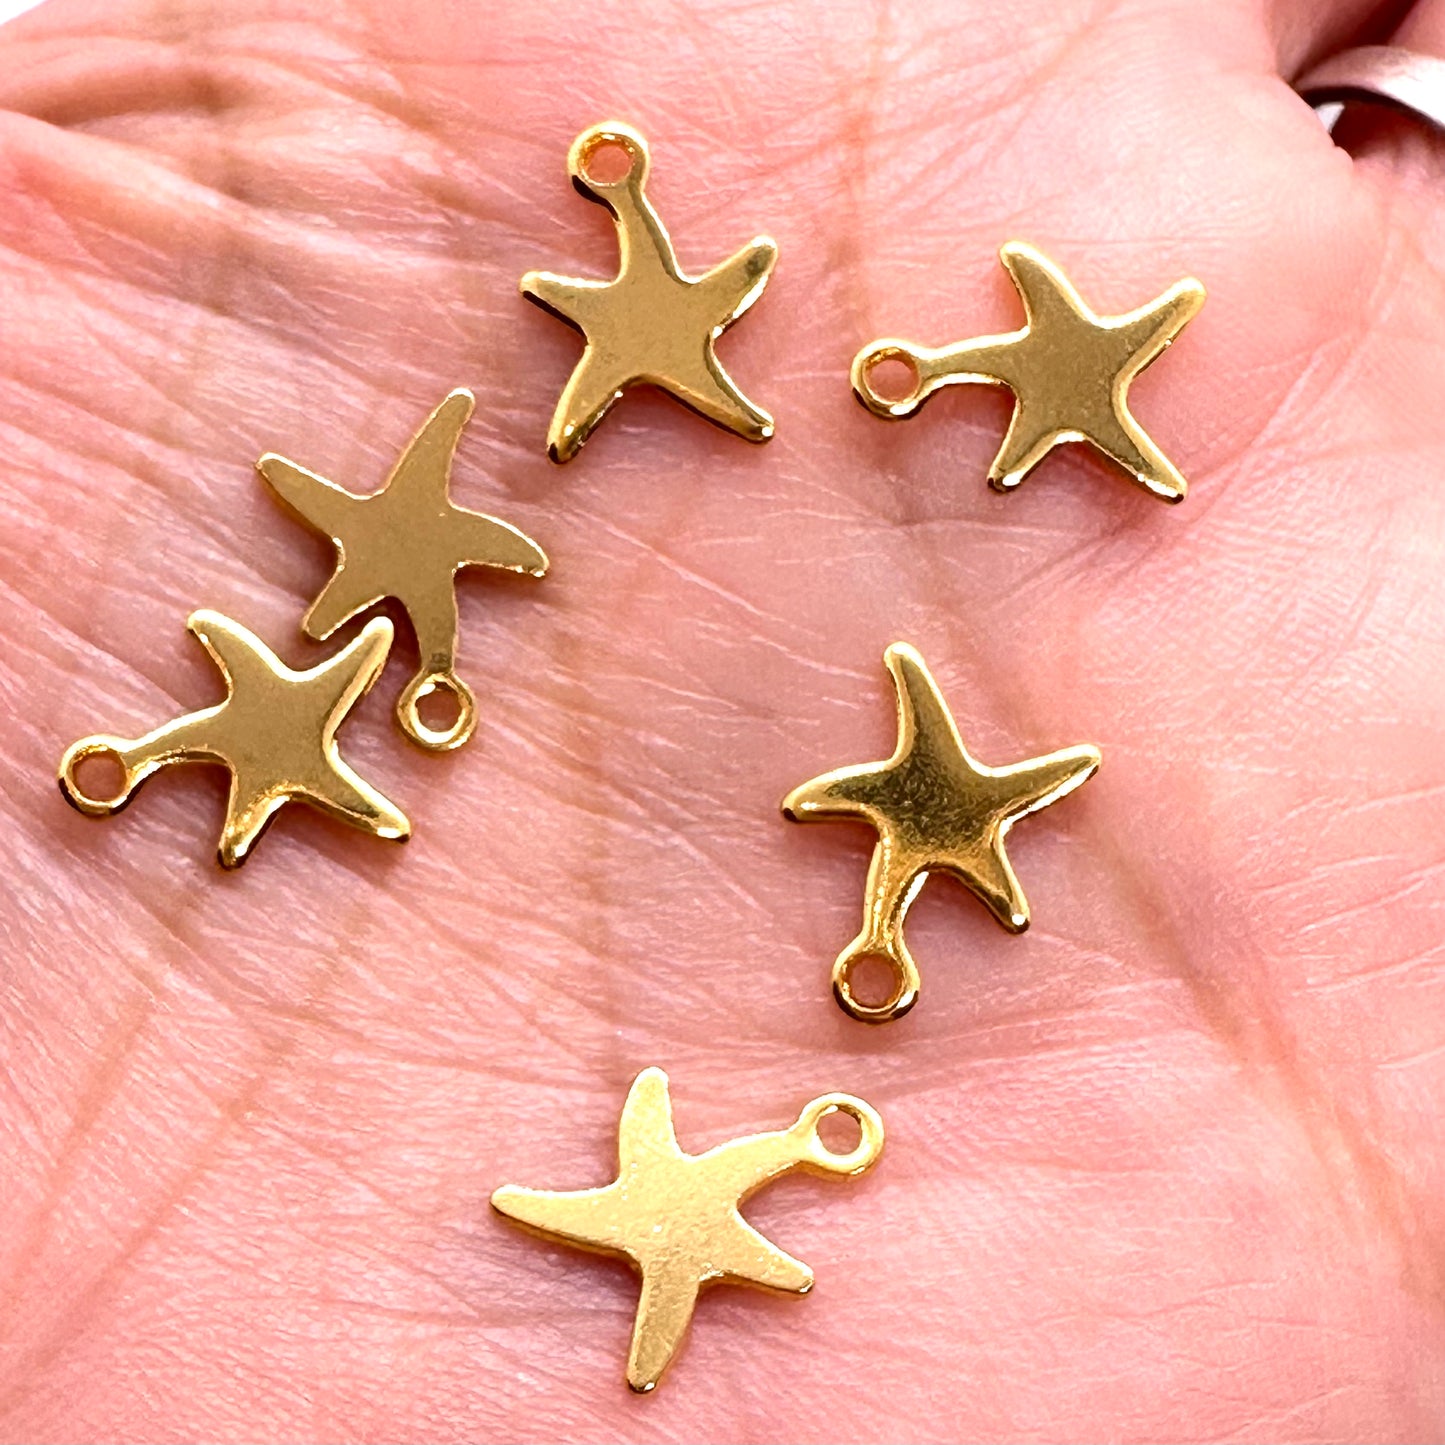 Starfish/Sea Stars Charms (6pcs)